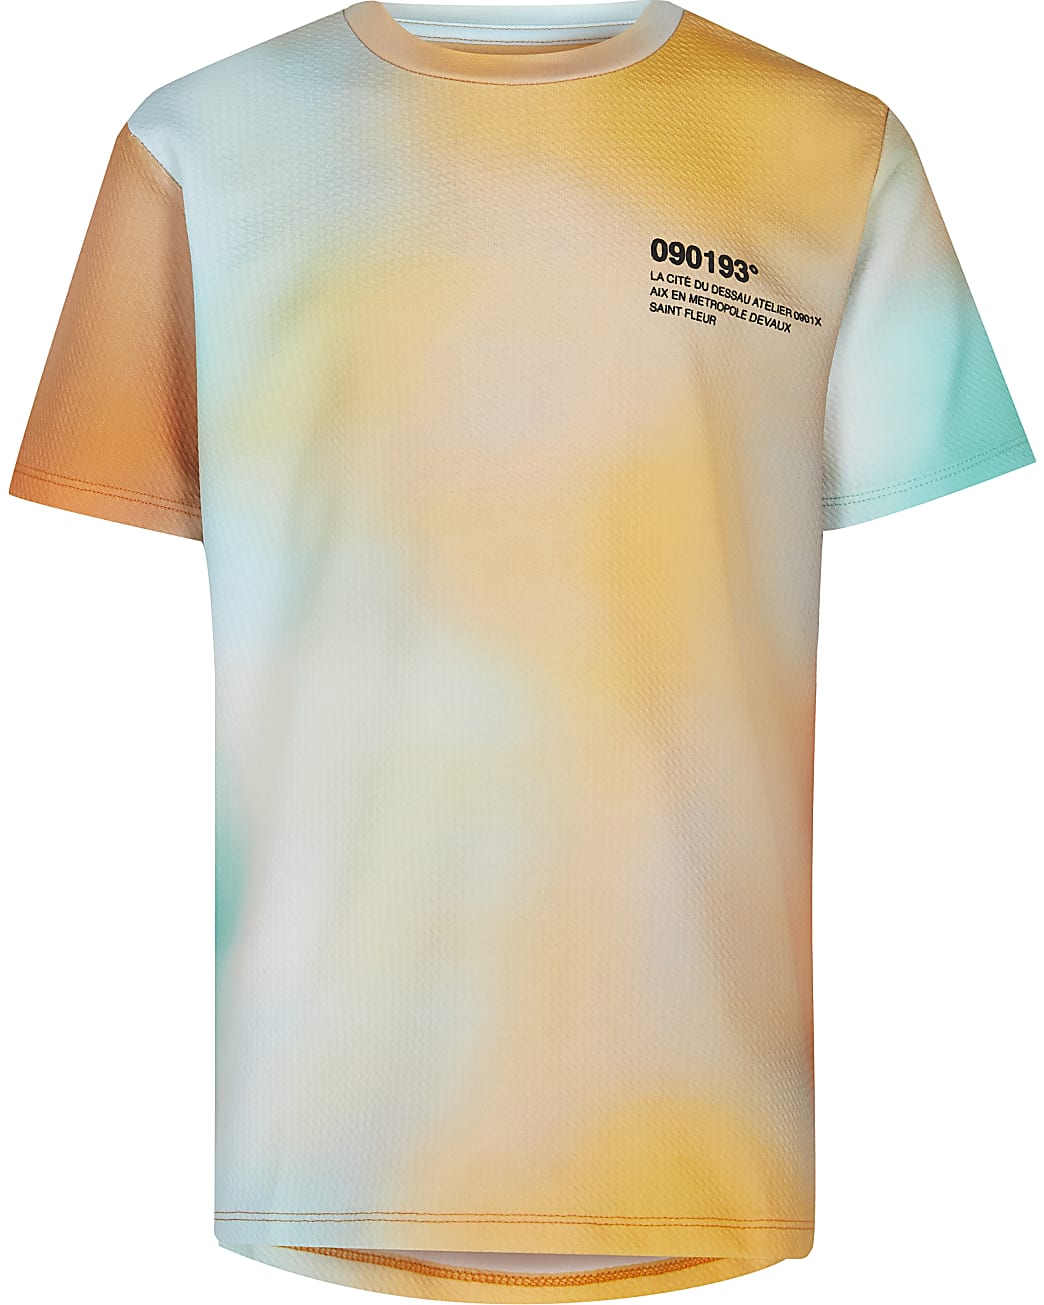 Boys orange ombre textured t-shirt